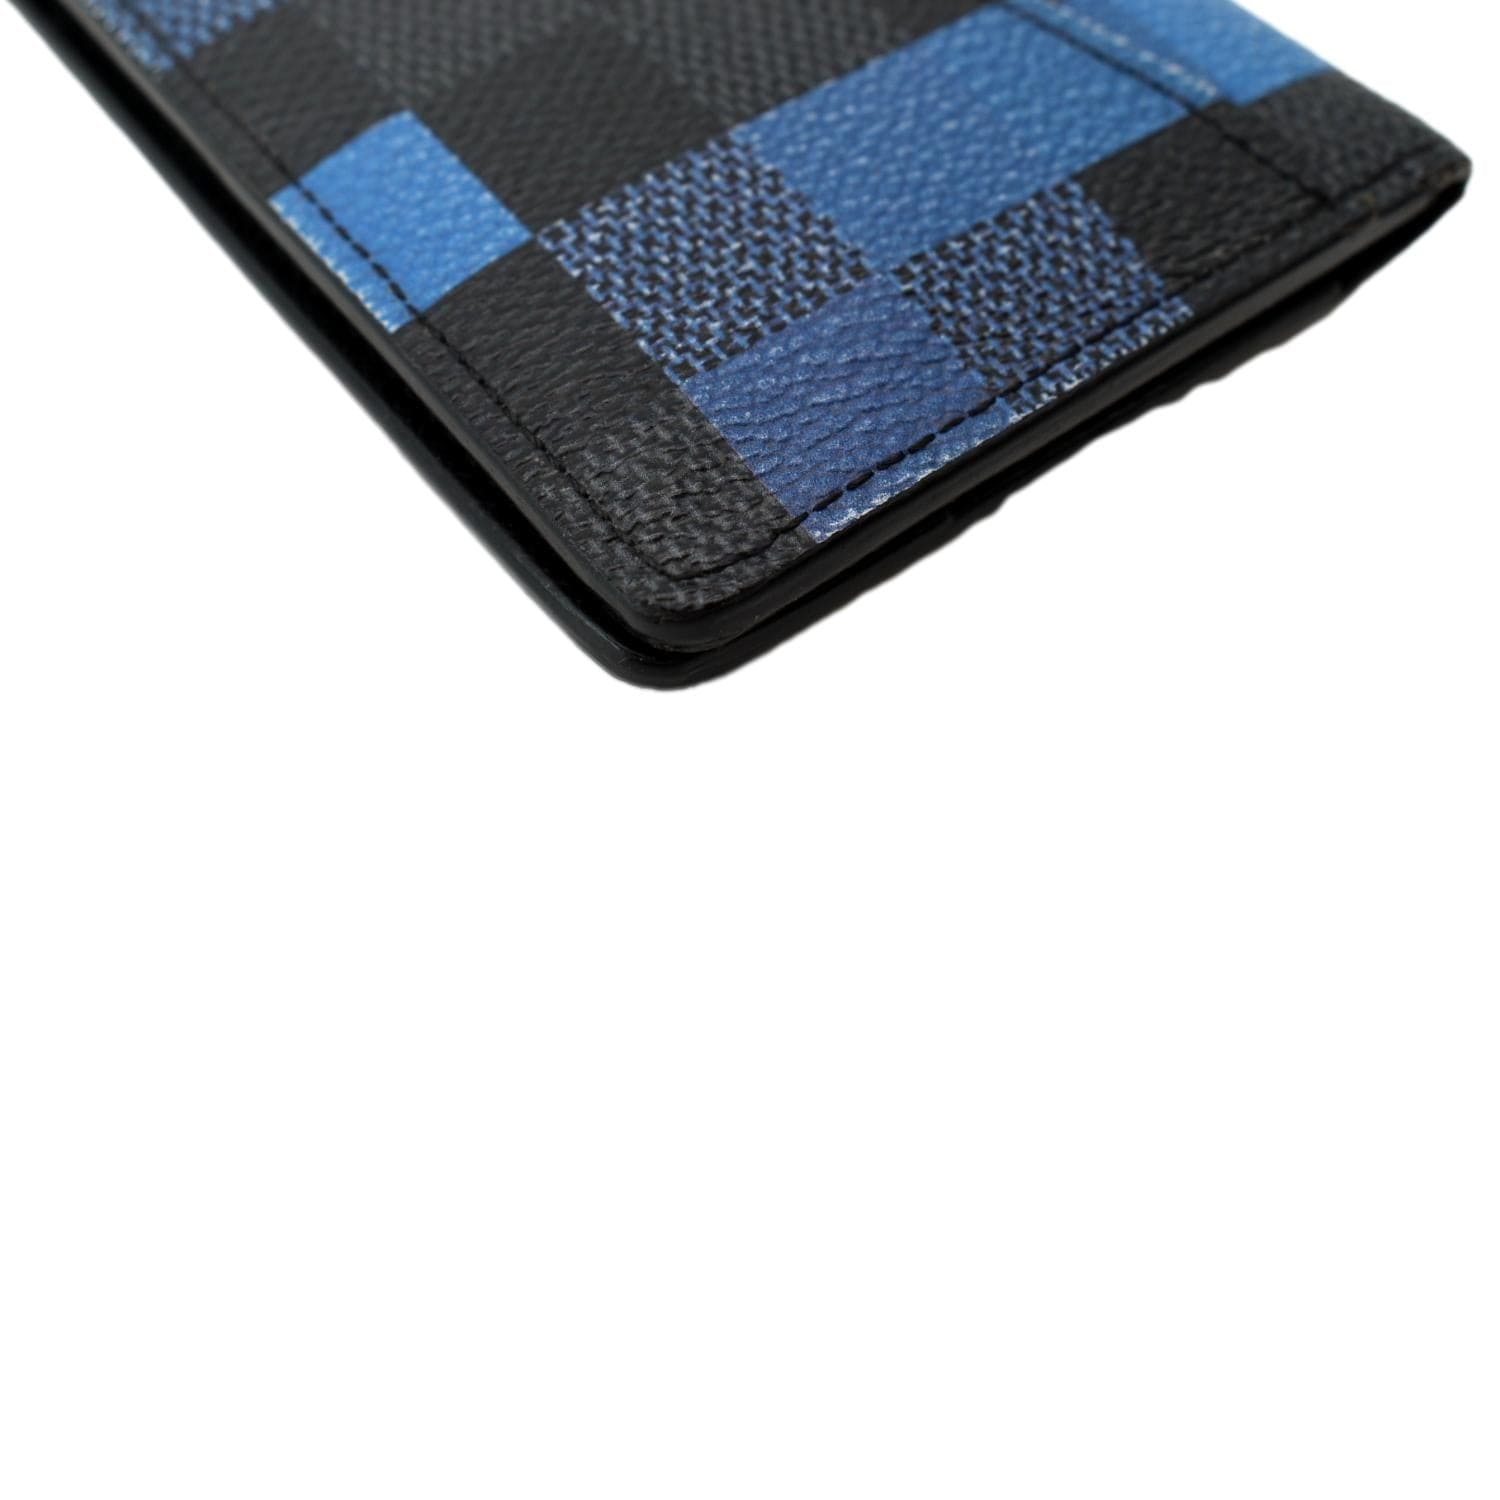 Pre-owned Louis Vuitton Pocket Organizer Damier Graphite Pixel Blue, ModeSens